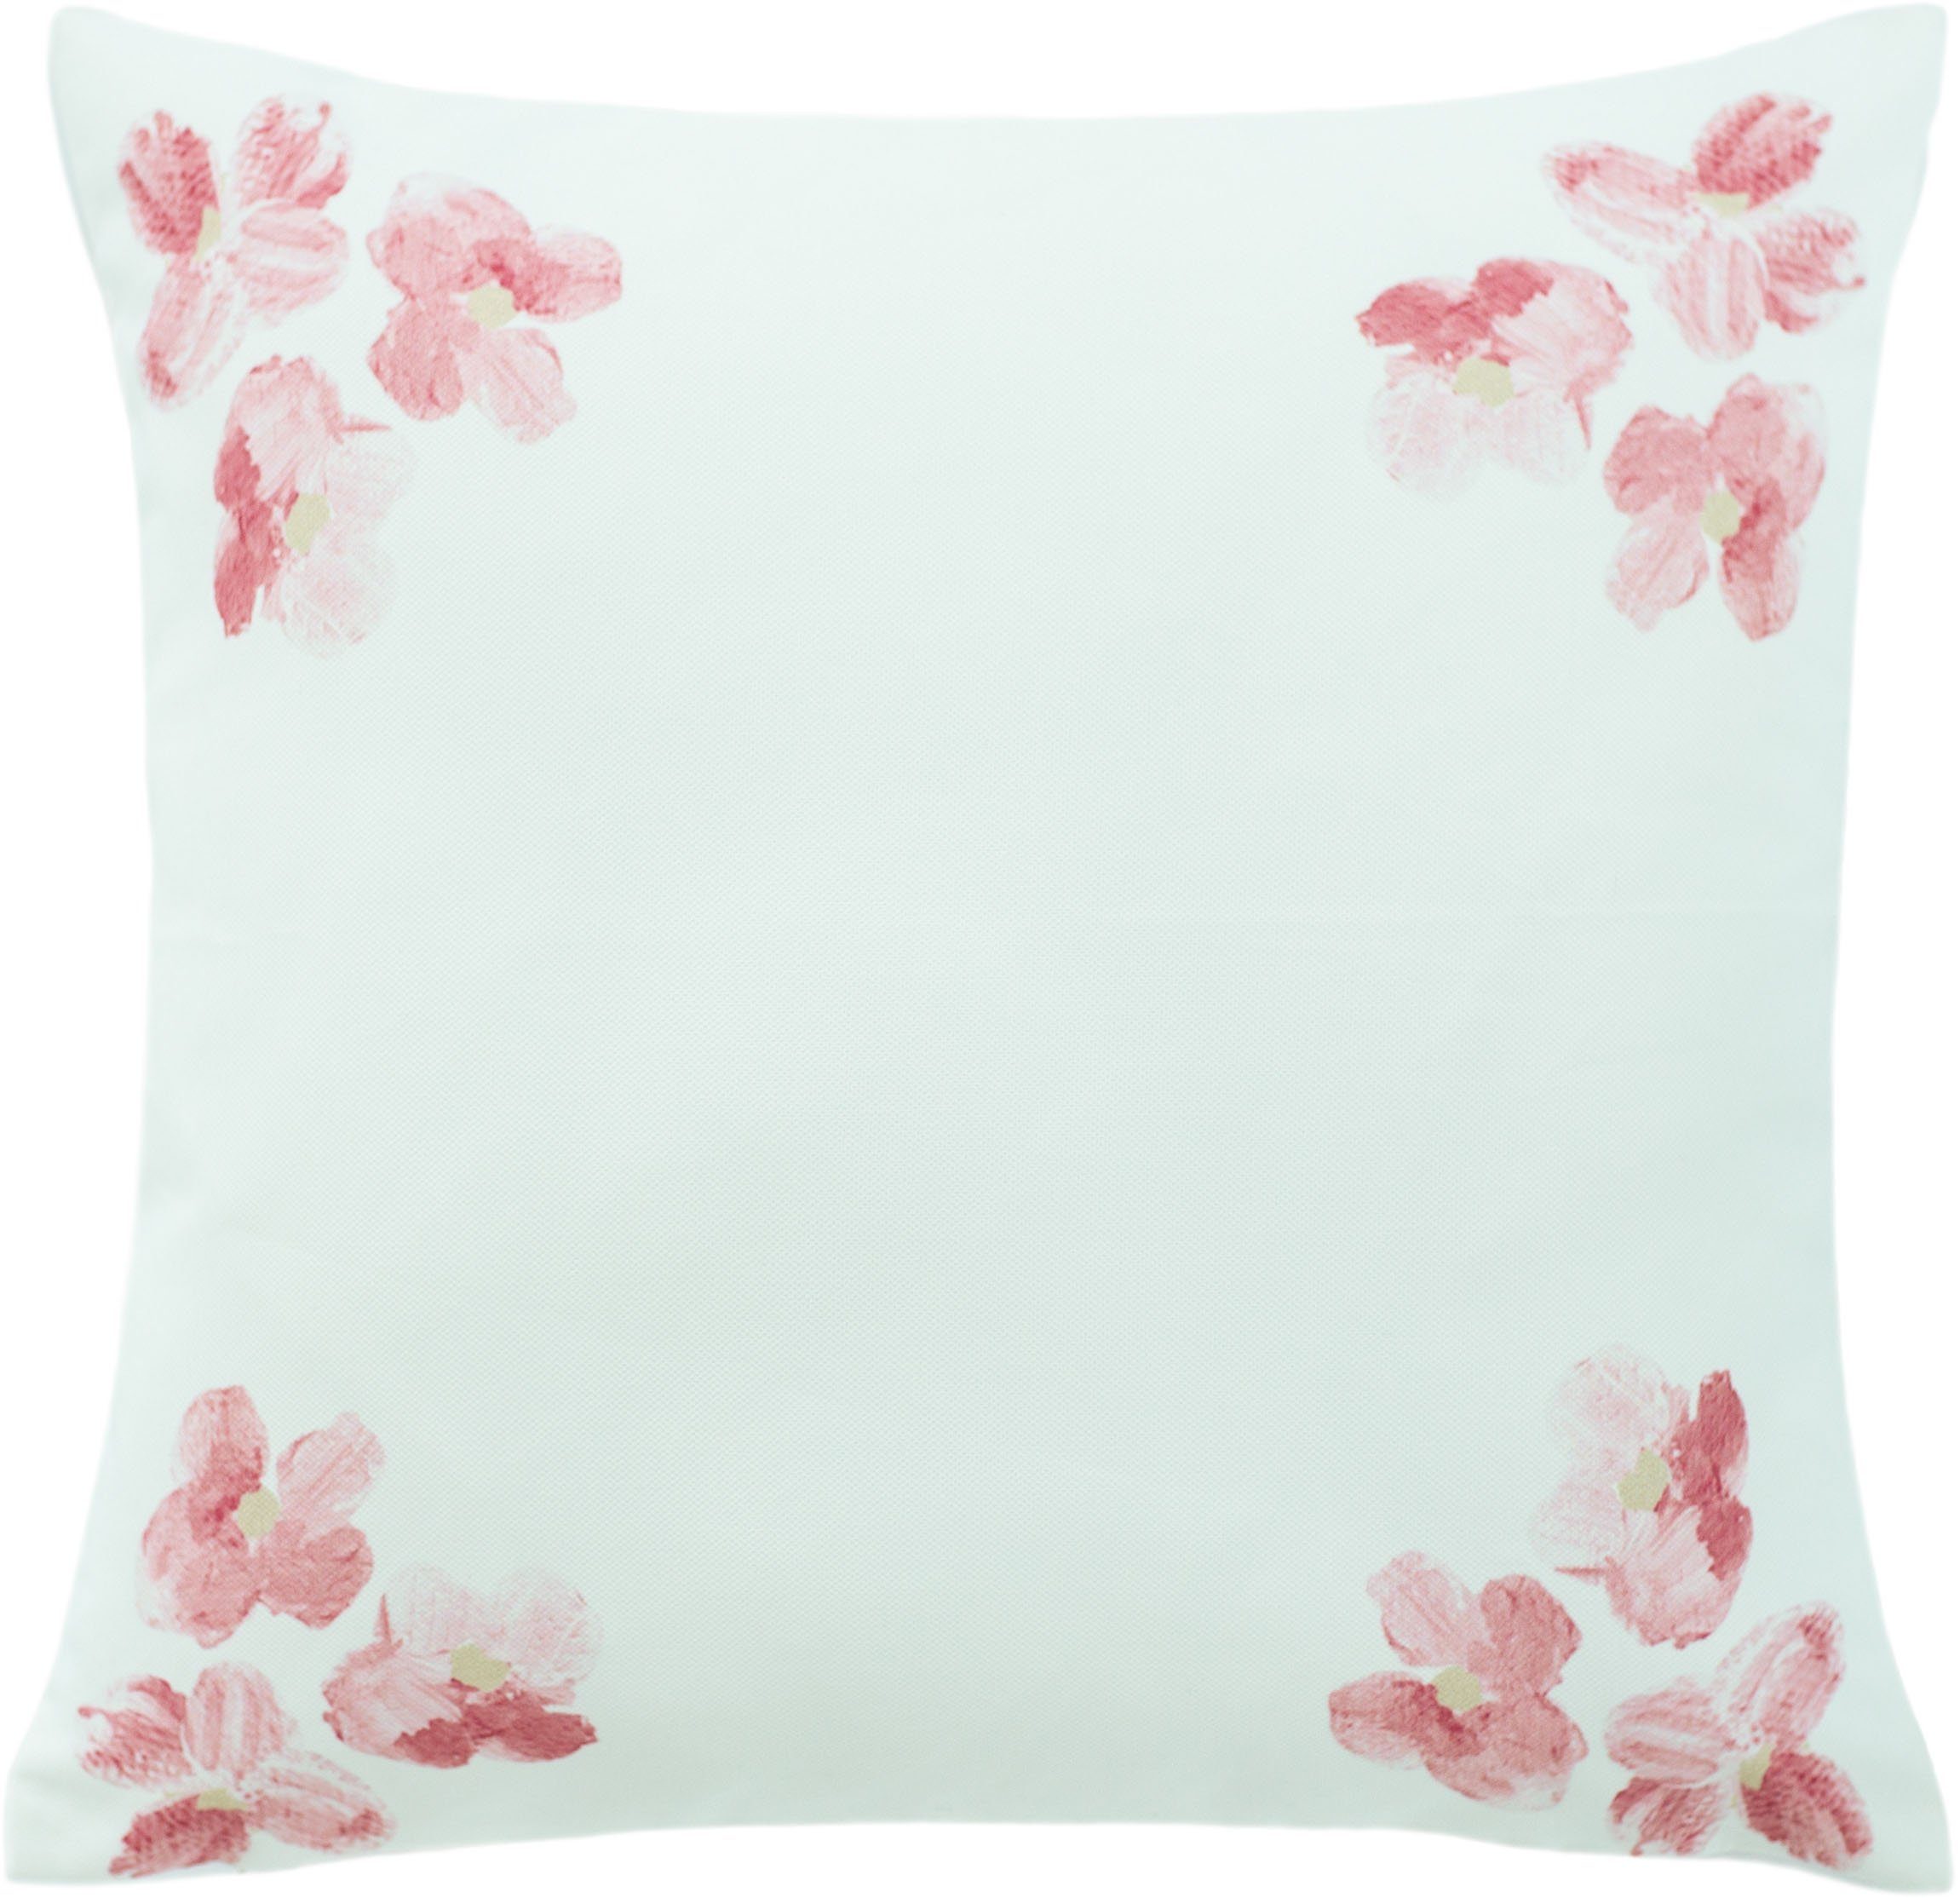 HOMING Dekokissen Kirschblüte, floral, Blumen, Kissenhülle ohne Füllung, 1 Stück rosa/weiß | Kissenbezüge